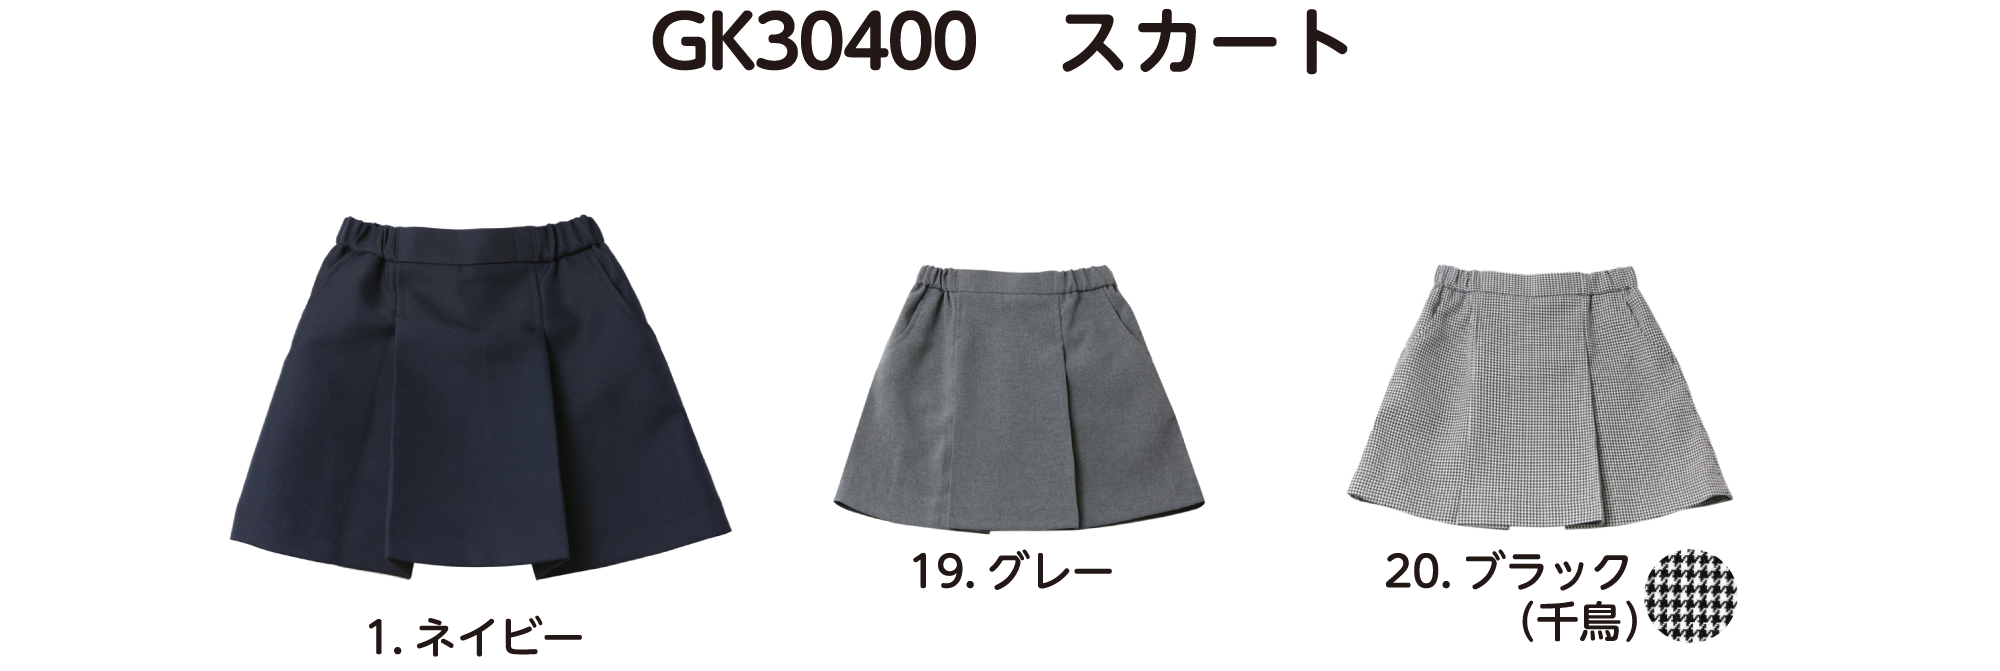 GK30400 スカート